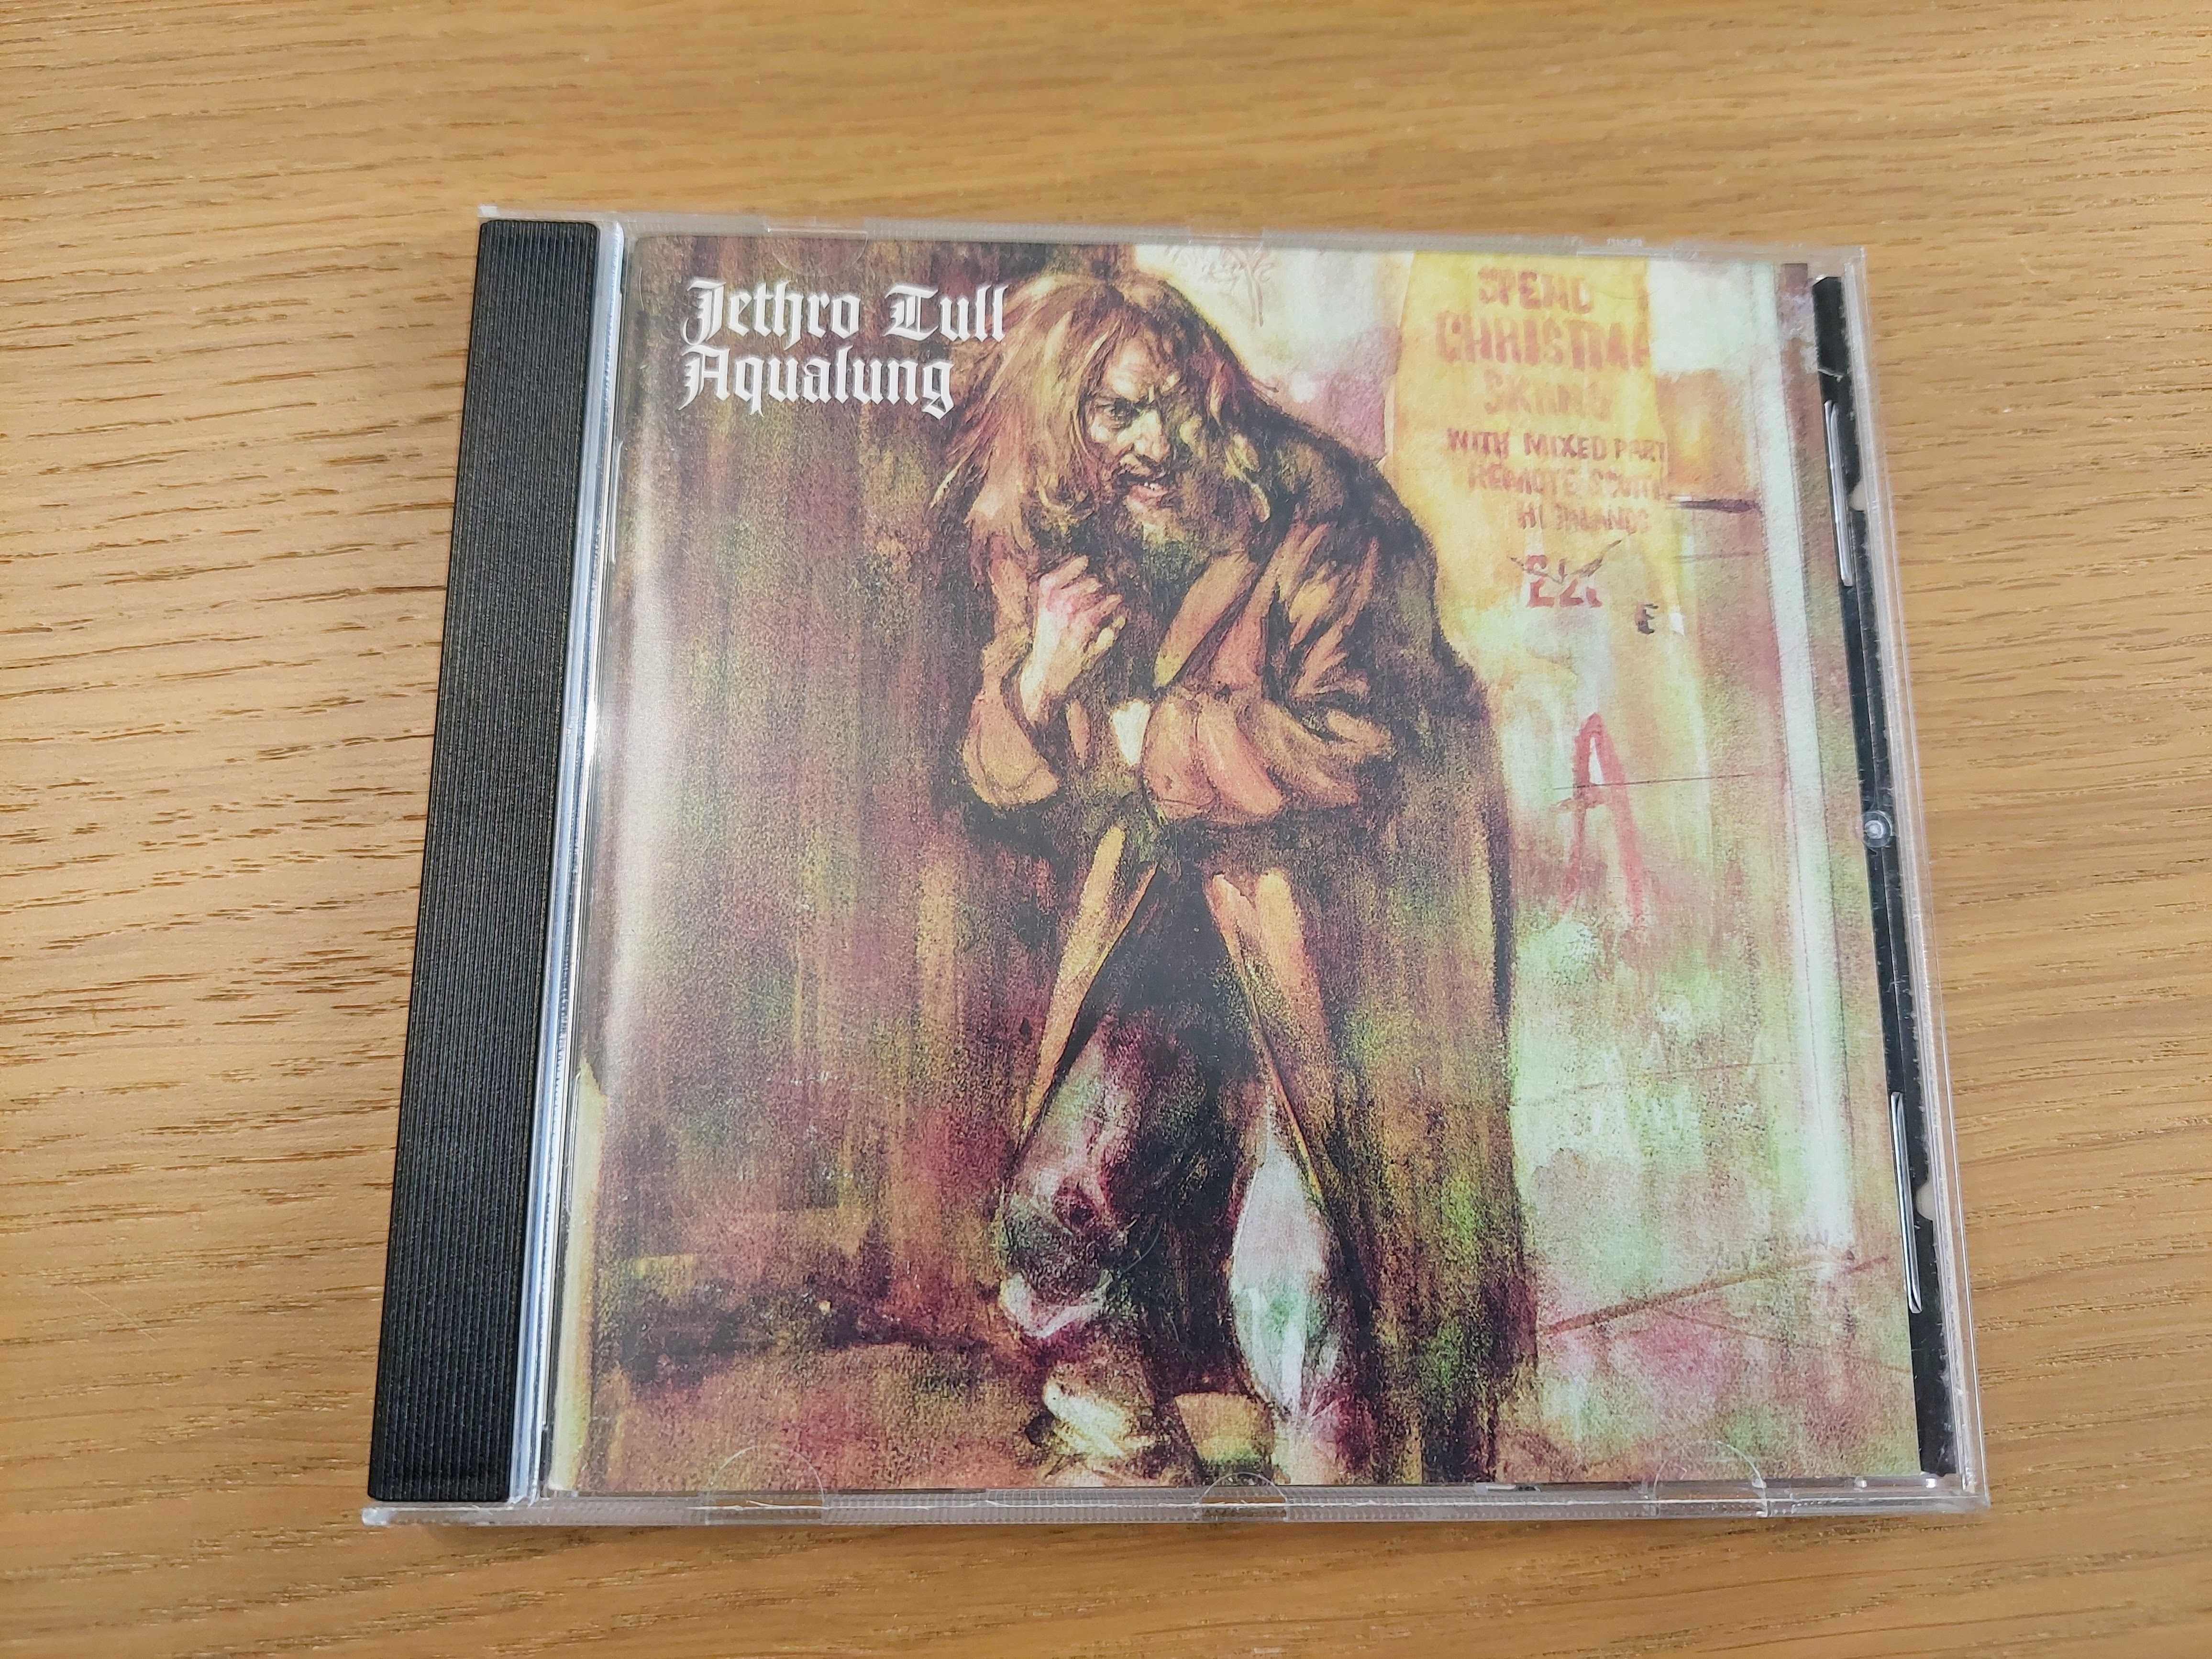 Używana płyta CD Jethro Tull Aqualung